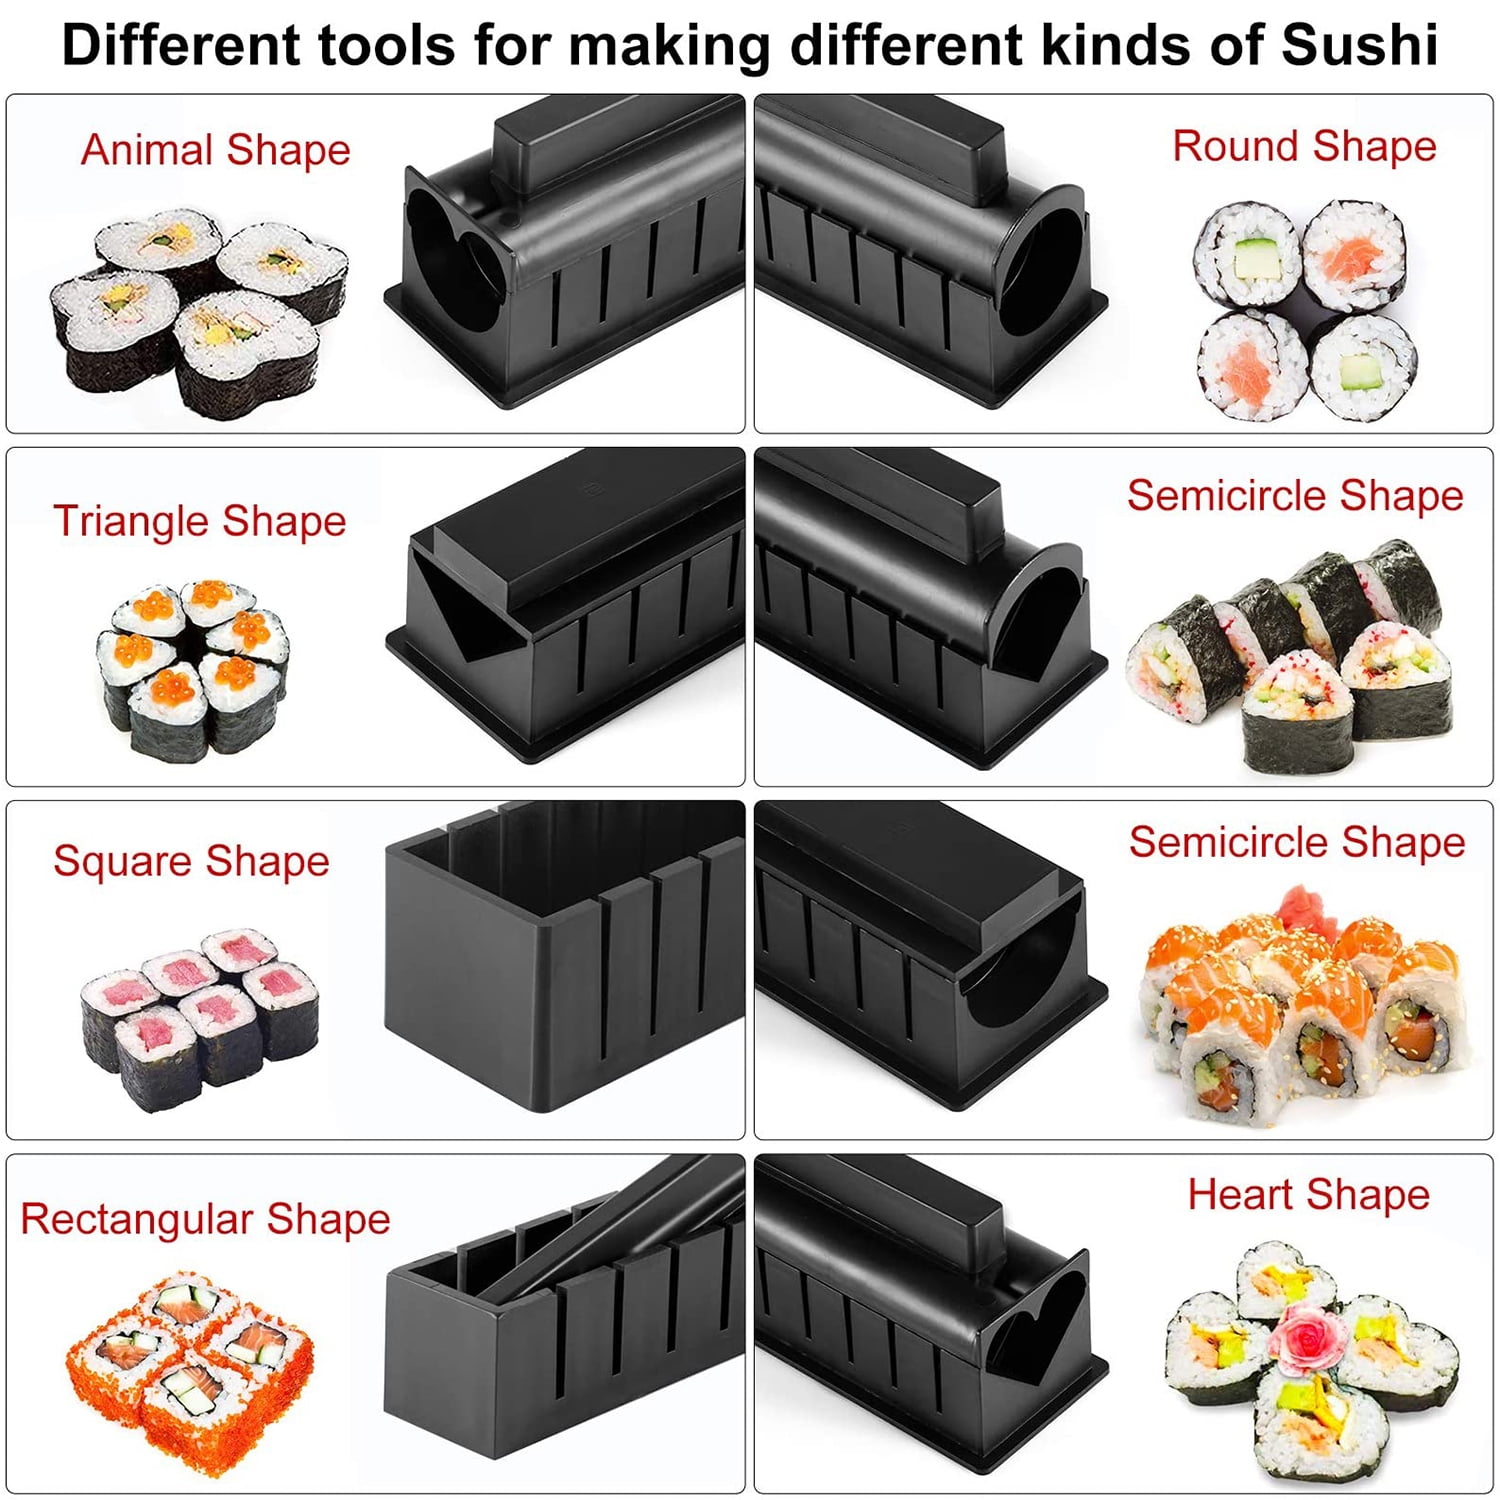 Sushi Making Kit, 10pcs Sushi Maker, Fun Sushi Rice Roll DIY Tool Set for Beginners, Easy to Clean Premium Plastic Plates Moulds Chopsticks Spatula